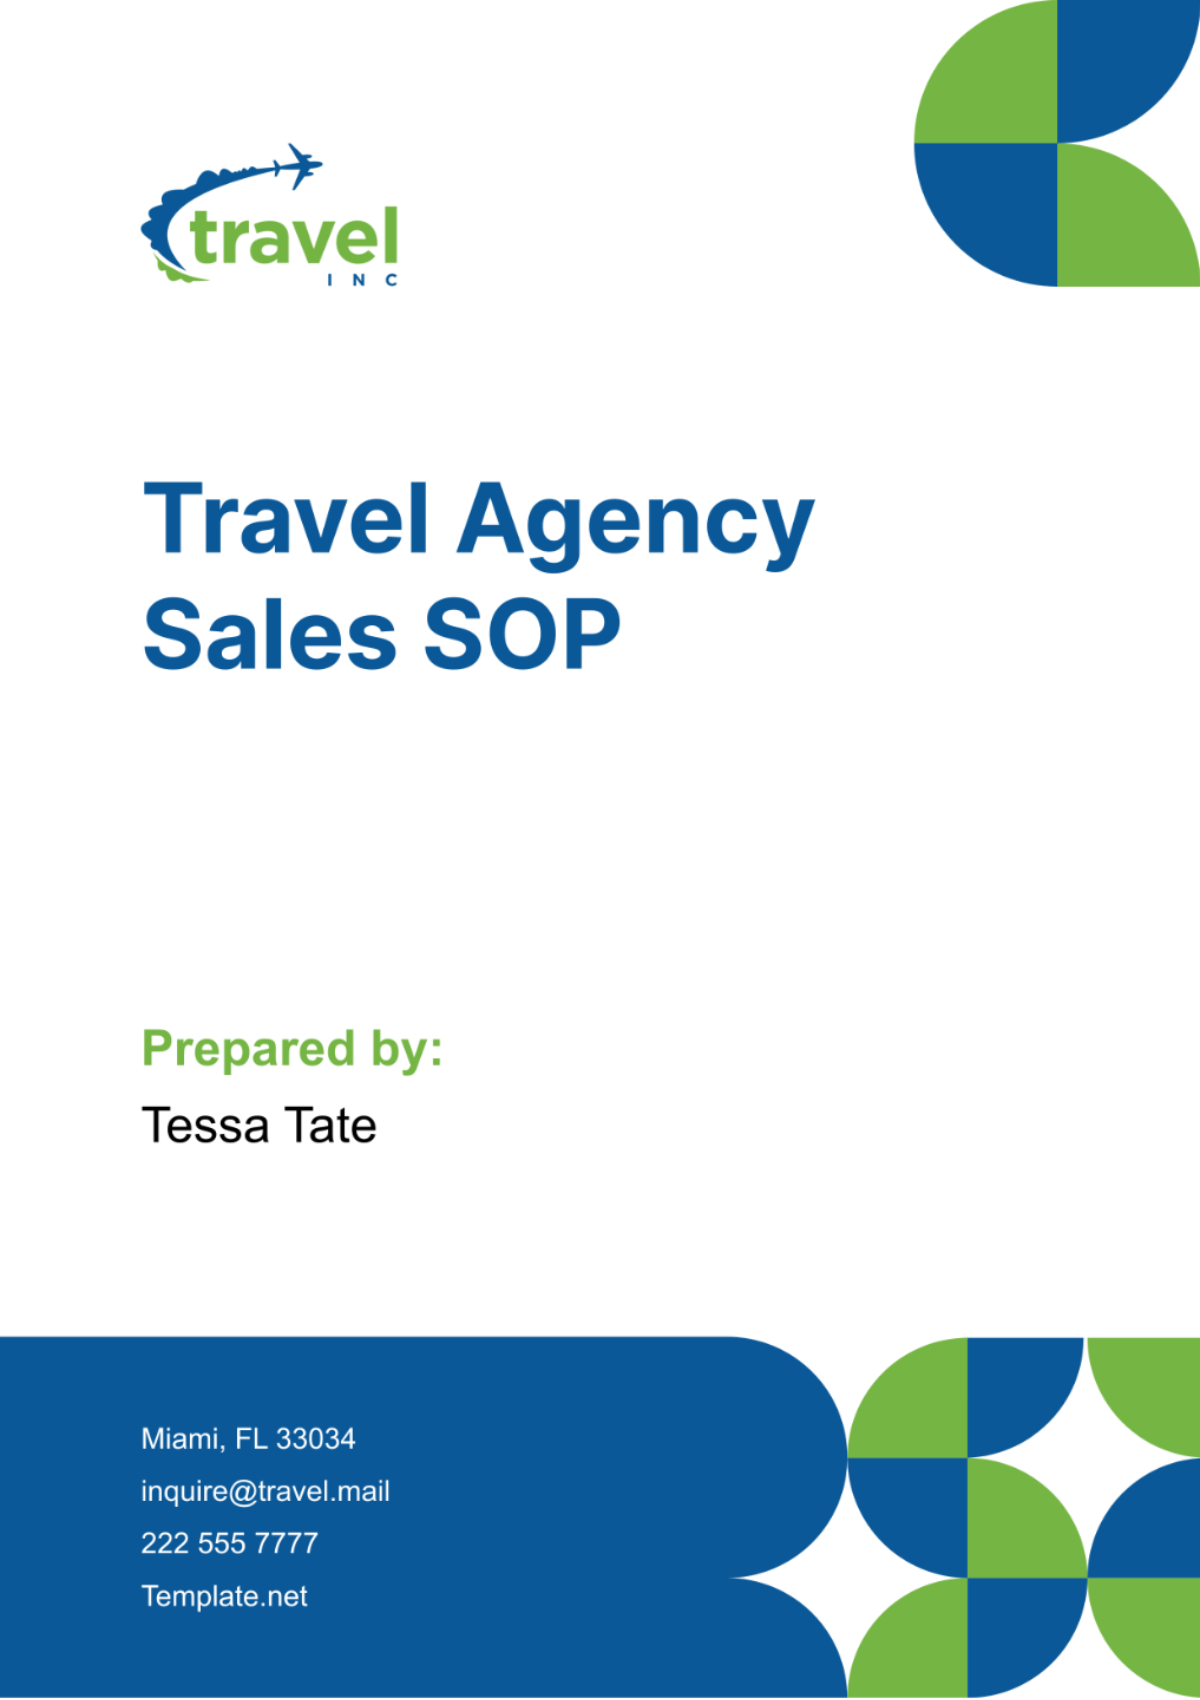 Travel Agency Sales SOP Template